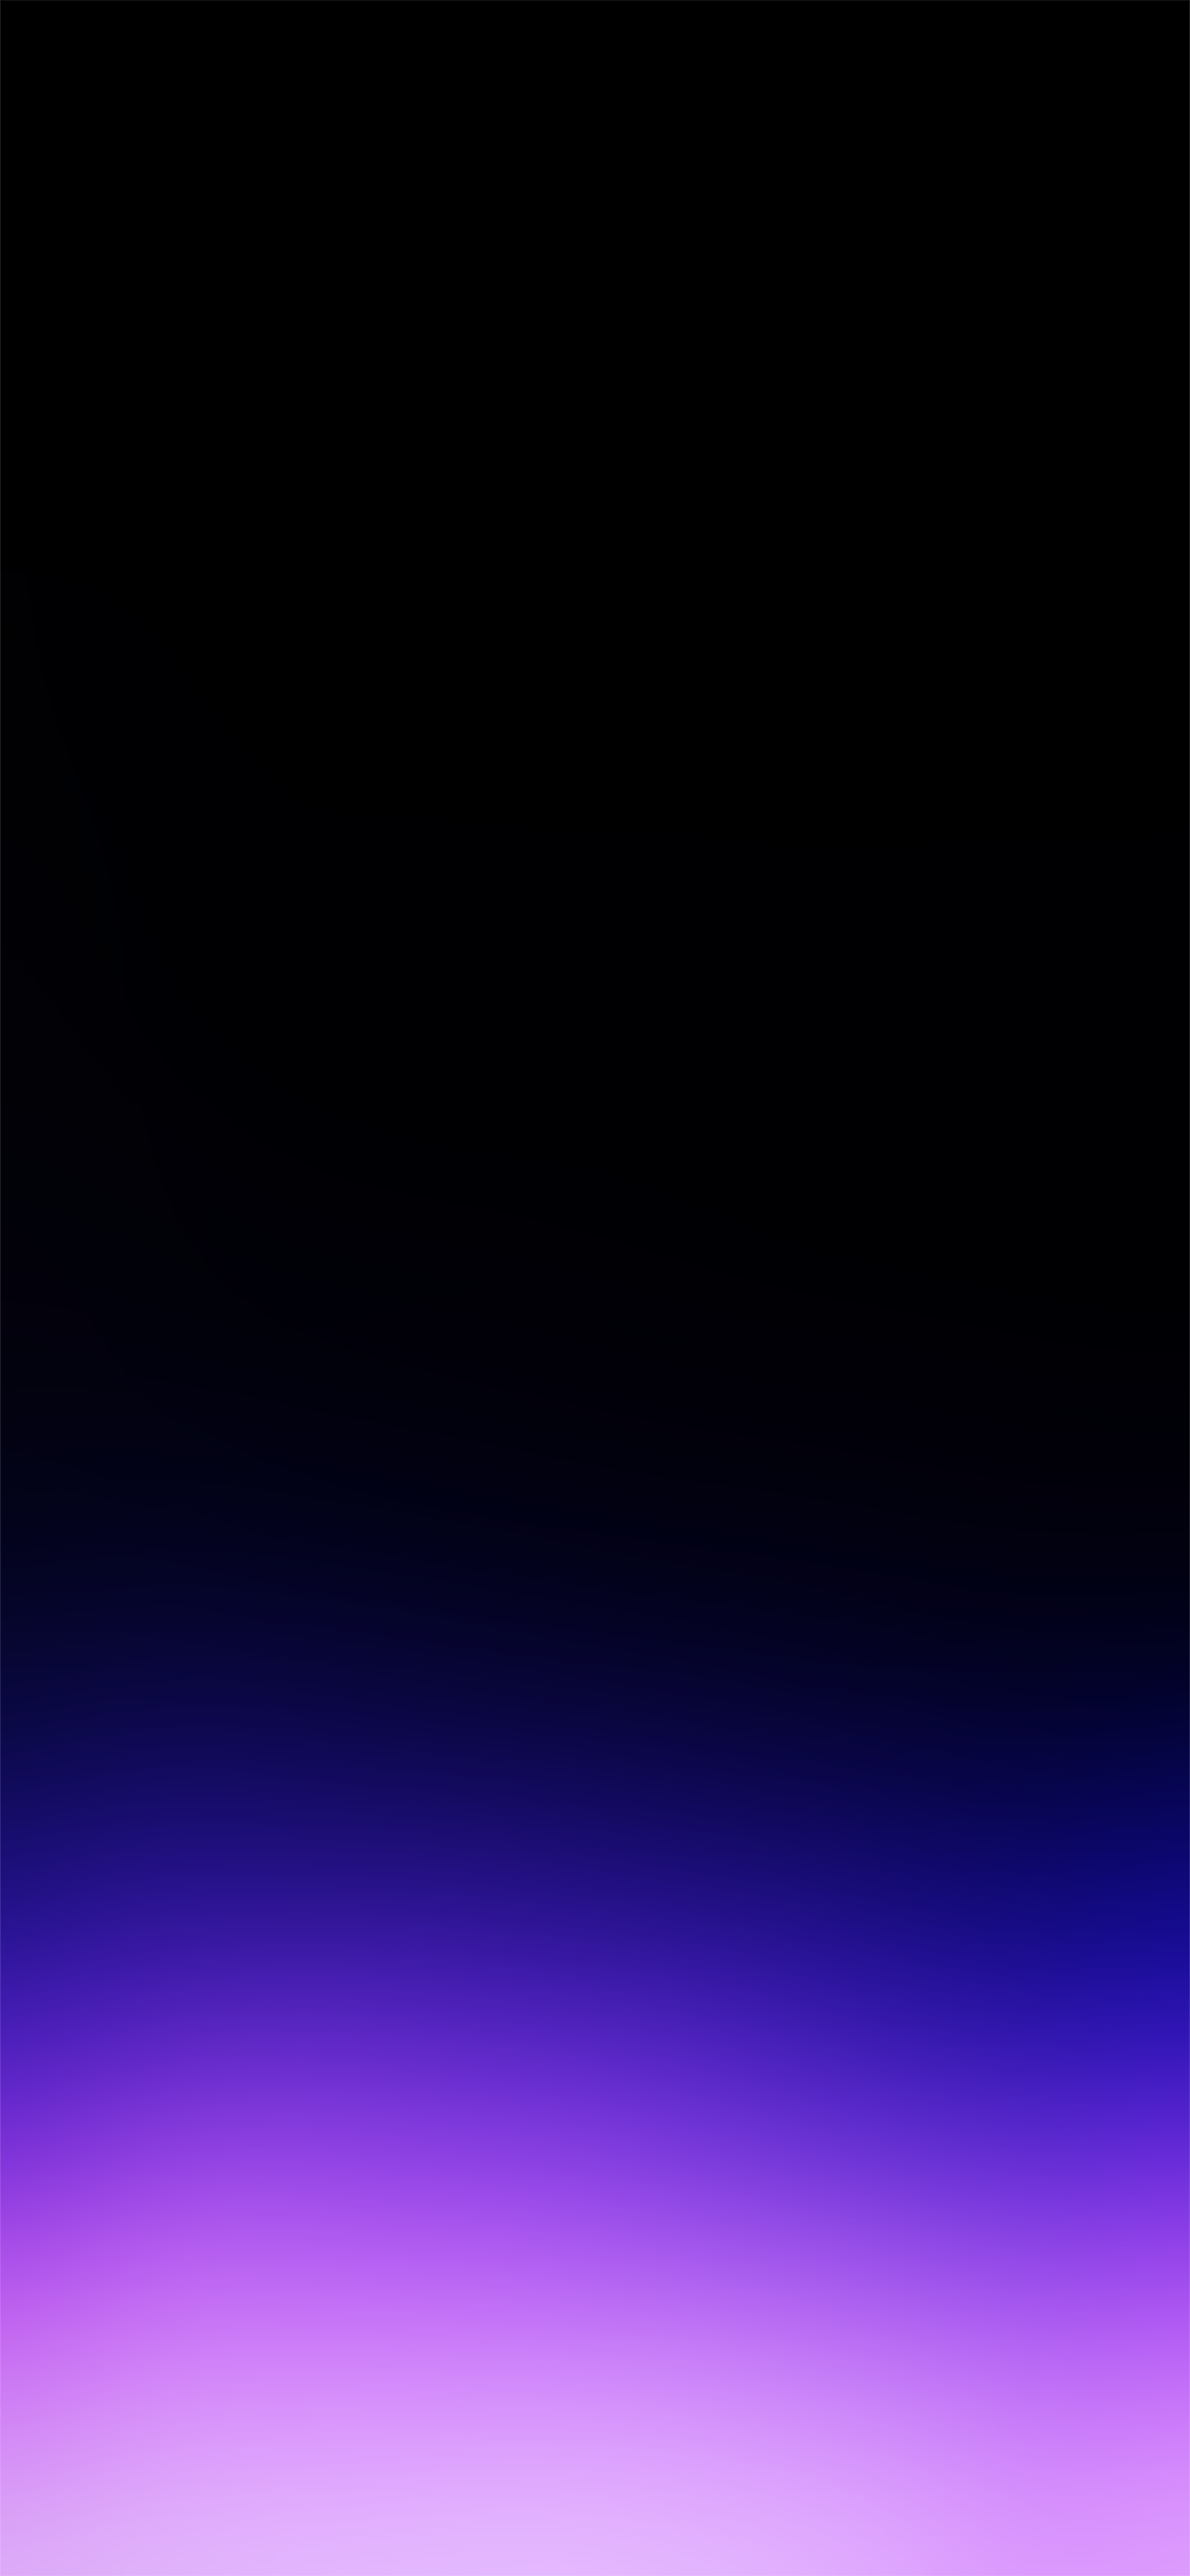 purpletrue black gradient wallpaper iphone ar72014